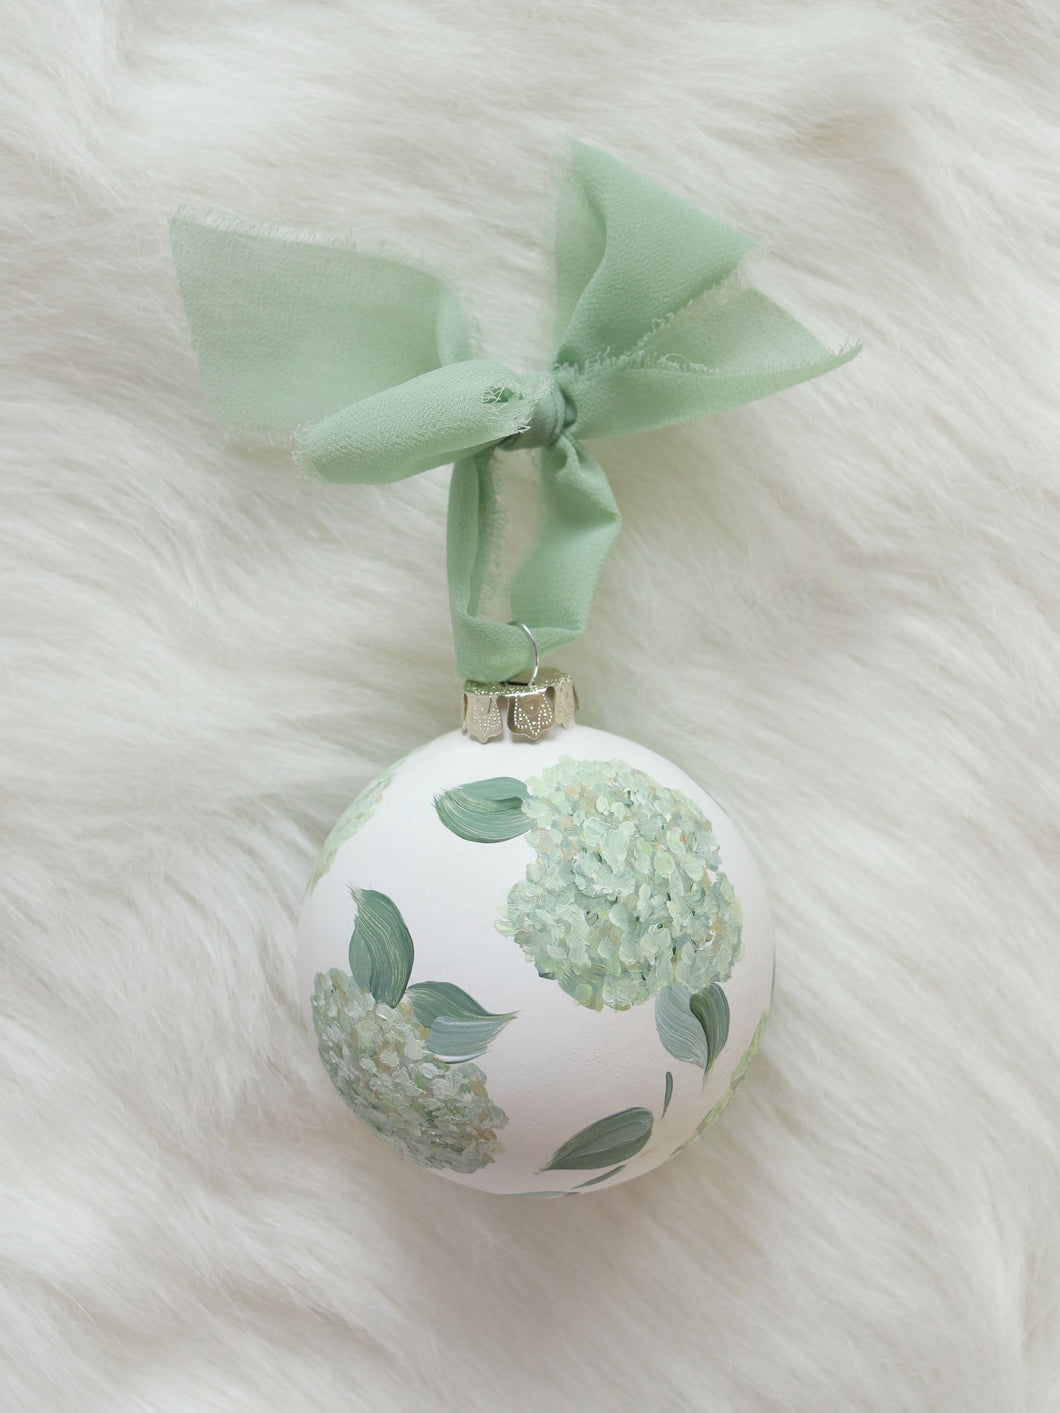 Green hydrangea hand-painted ornament